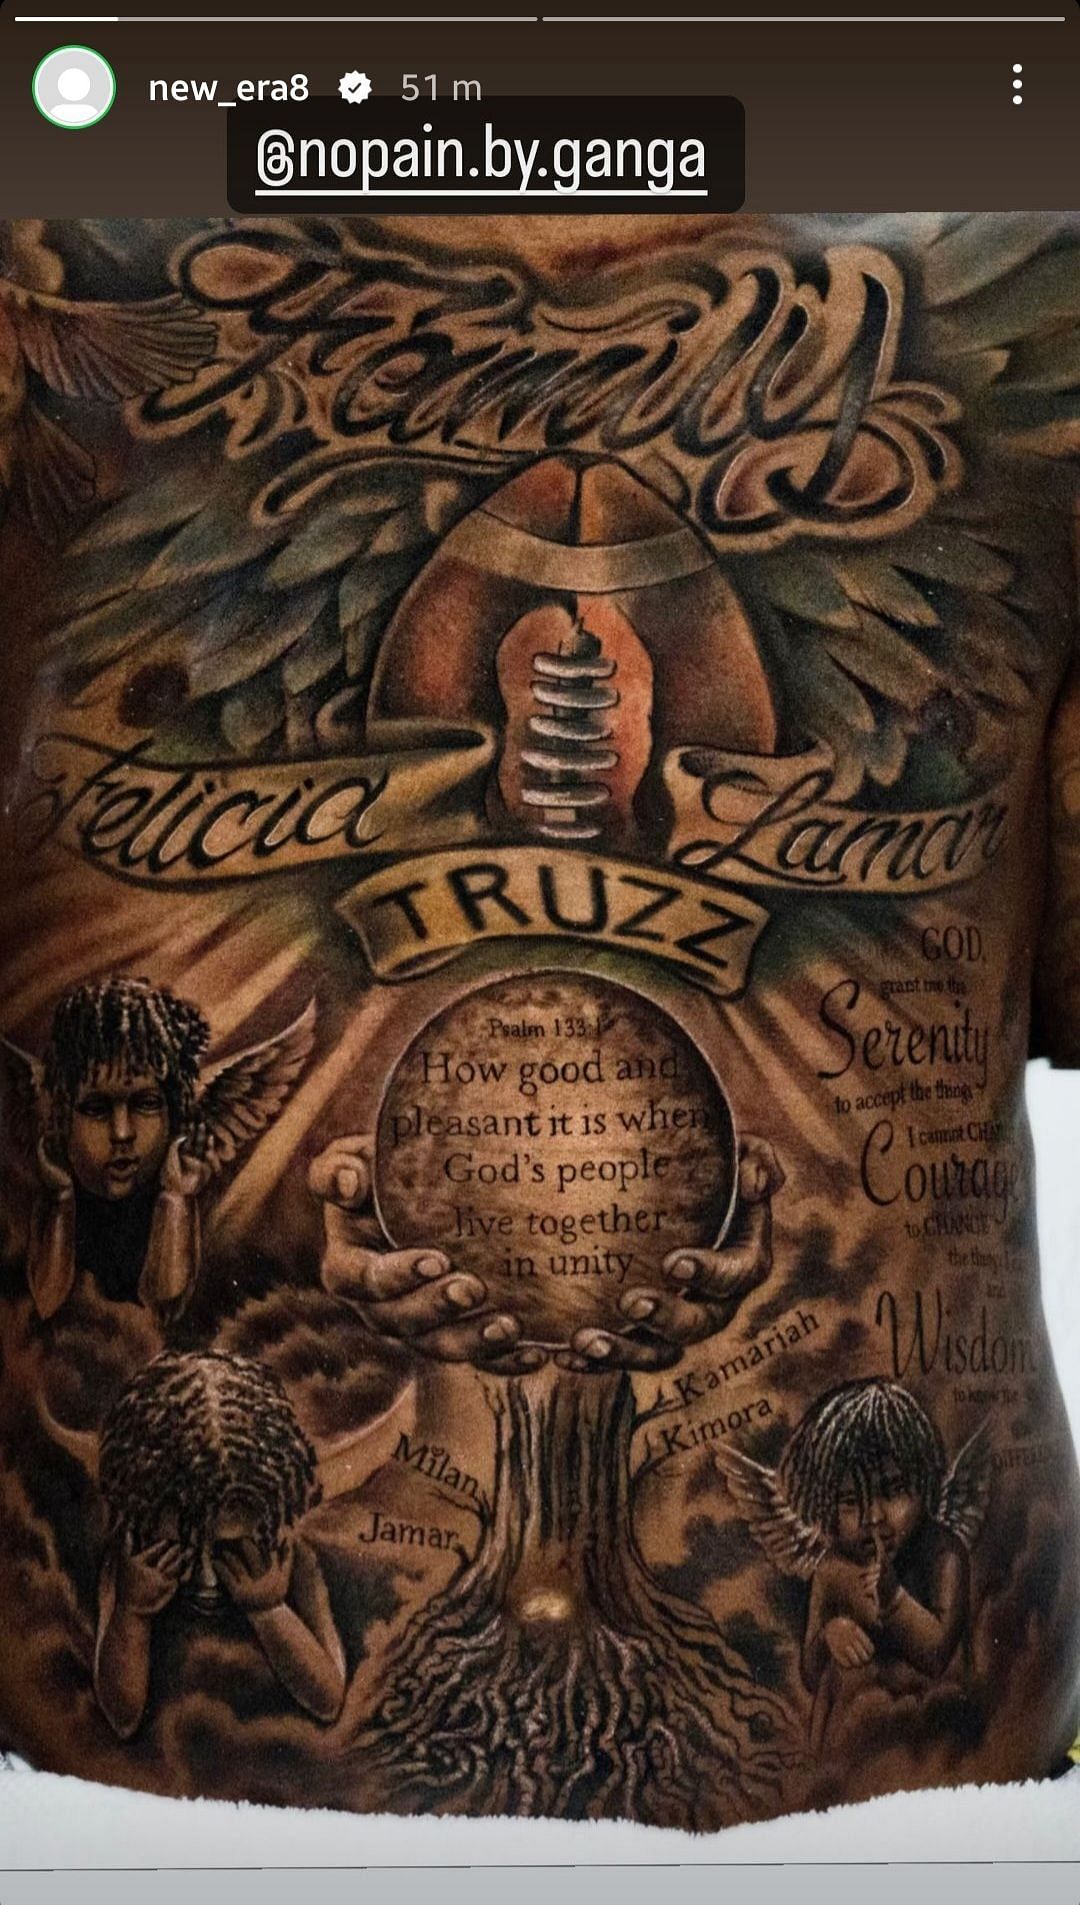 Lamar Jackson’s new tattoo, courtesy of No Pain by Ganga. (Image credit: new_era8 on Instagram)